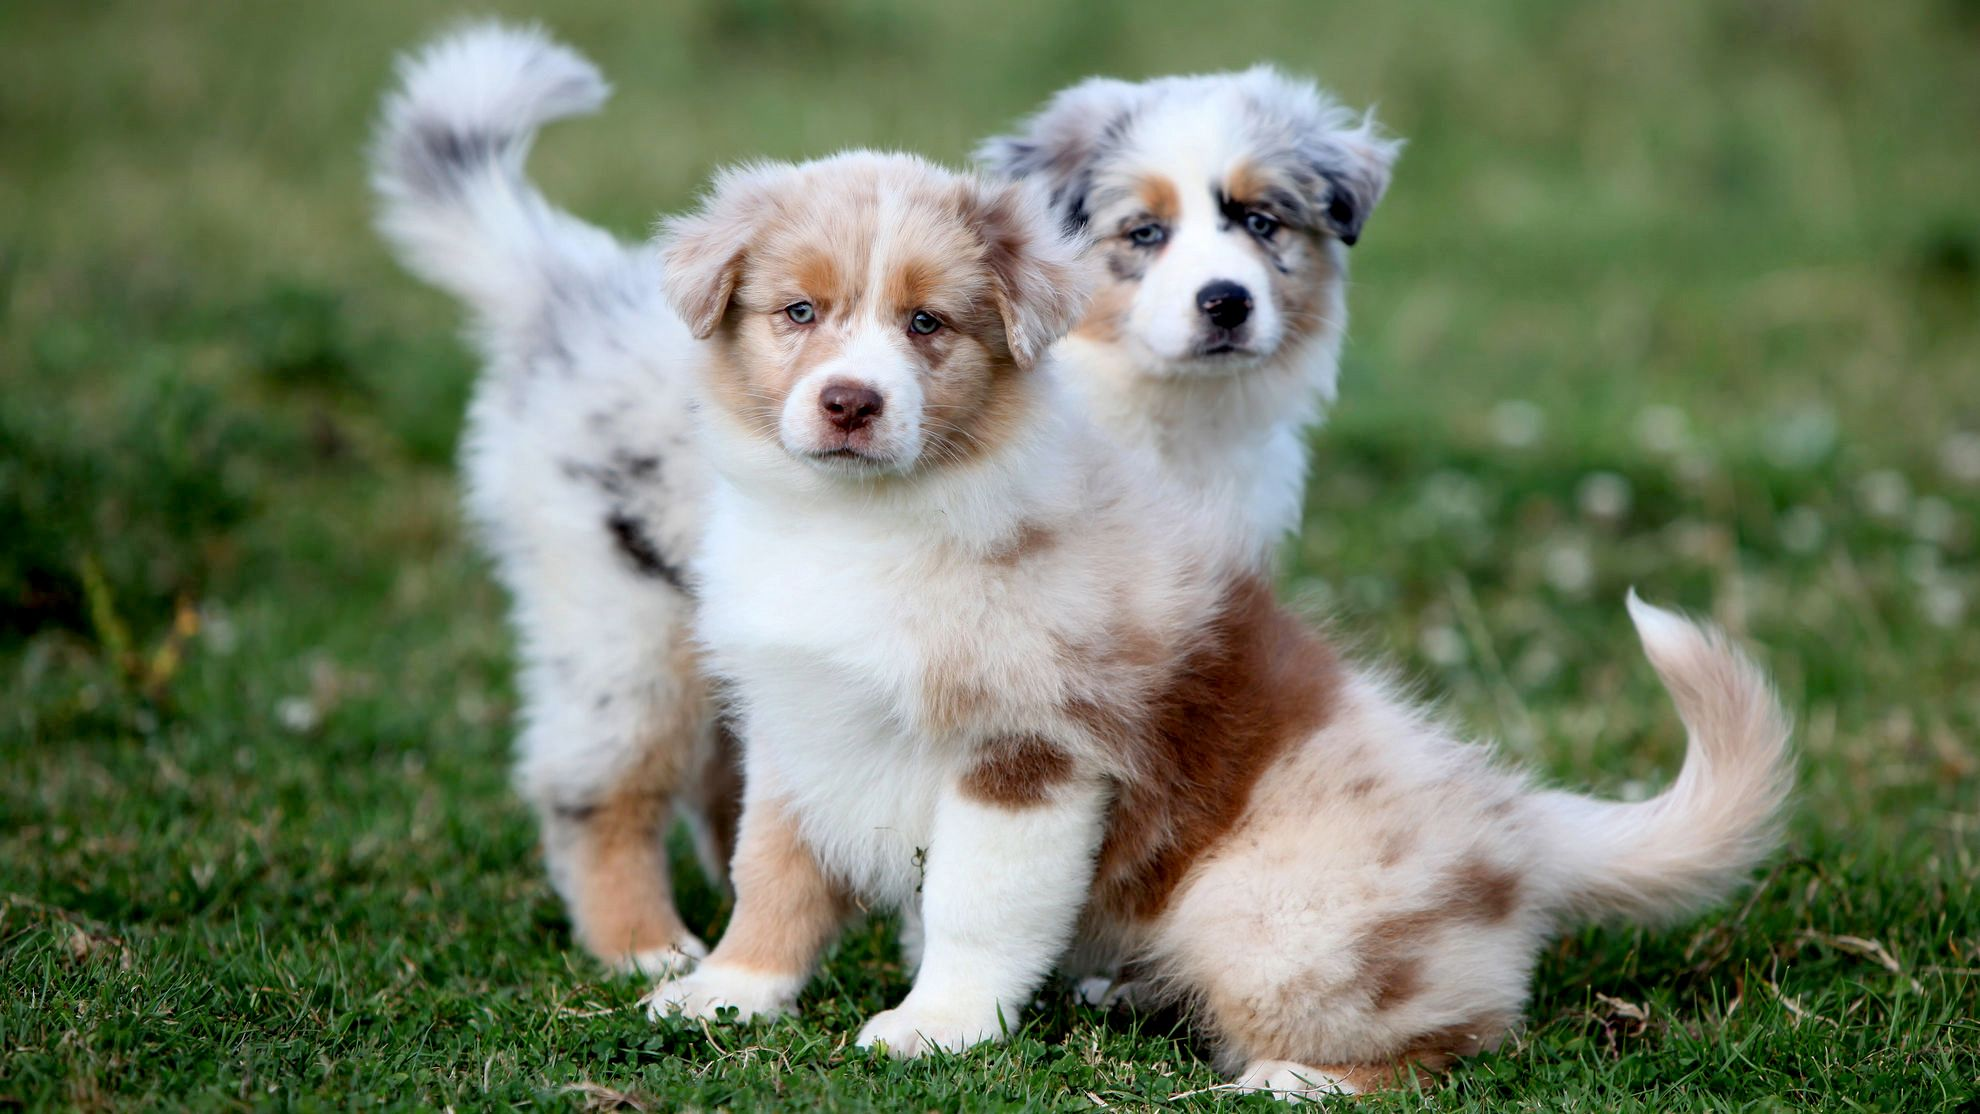 Two Australian Shepherd puppies on grass, one standing, one sitting